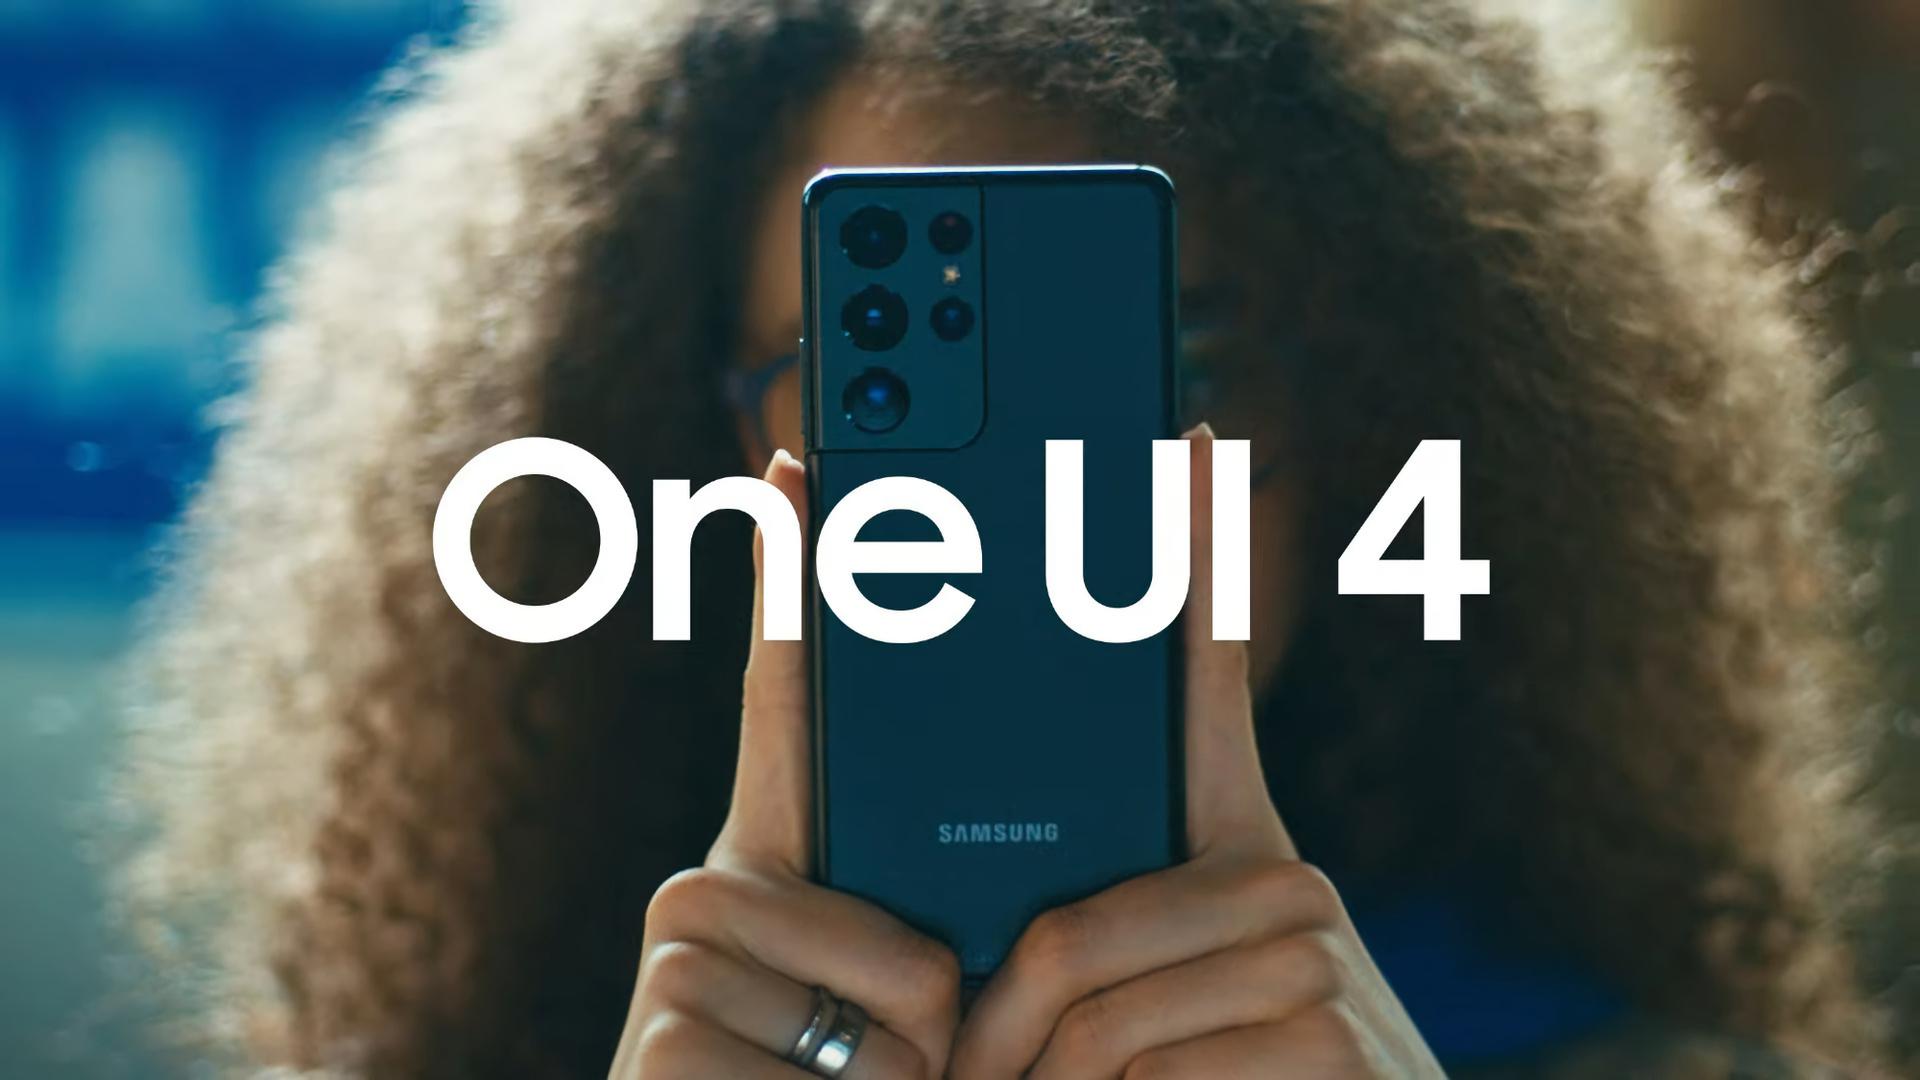 Samsung revela detalles de One UI 4 en un vídeo oficial